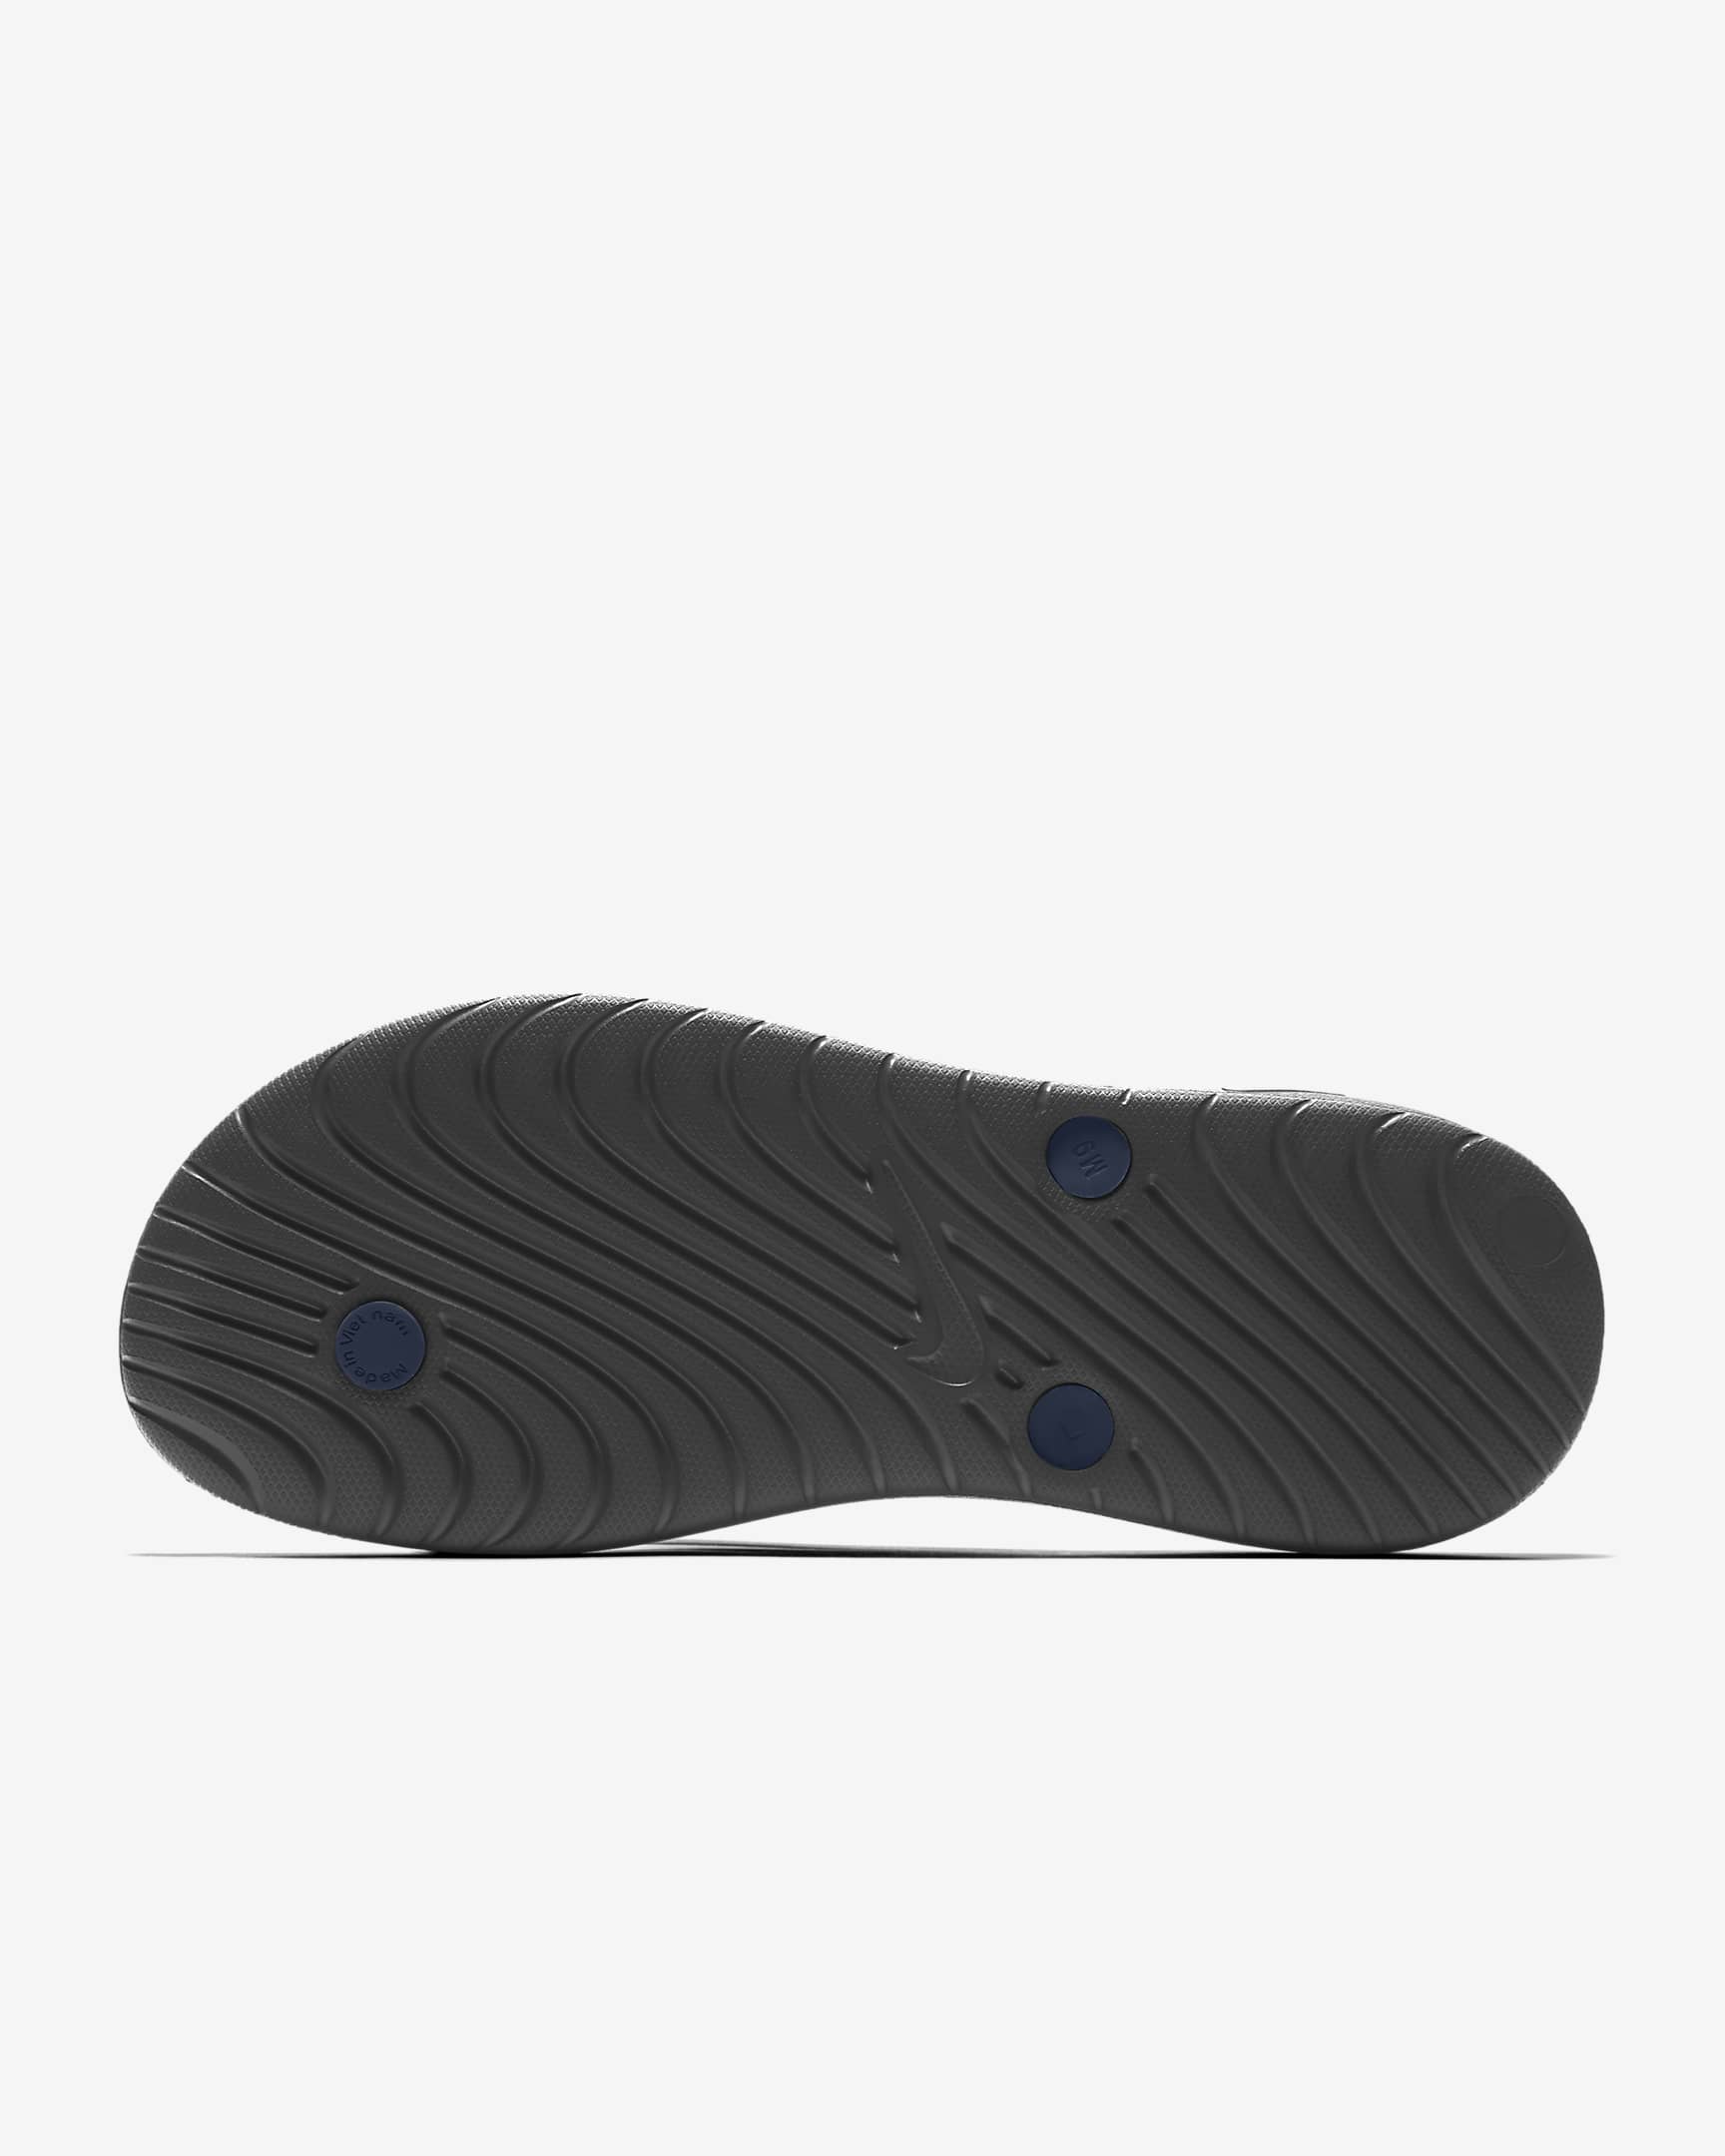 Nike Solay Men's Flip-Flop. Nike HR